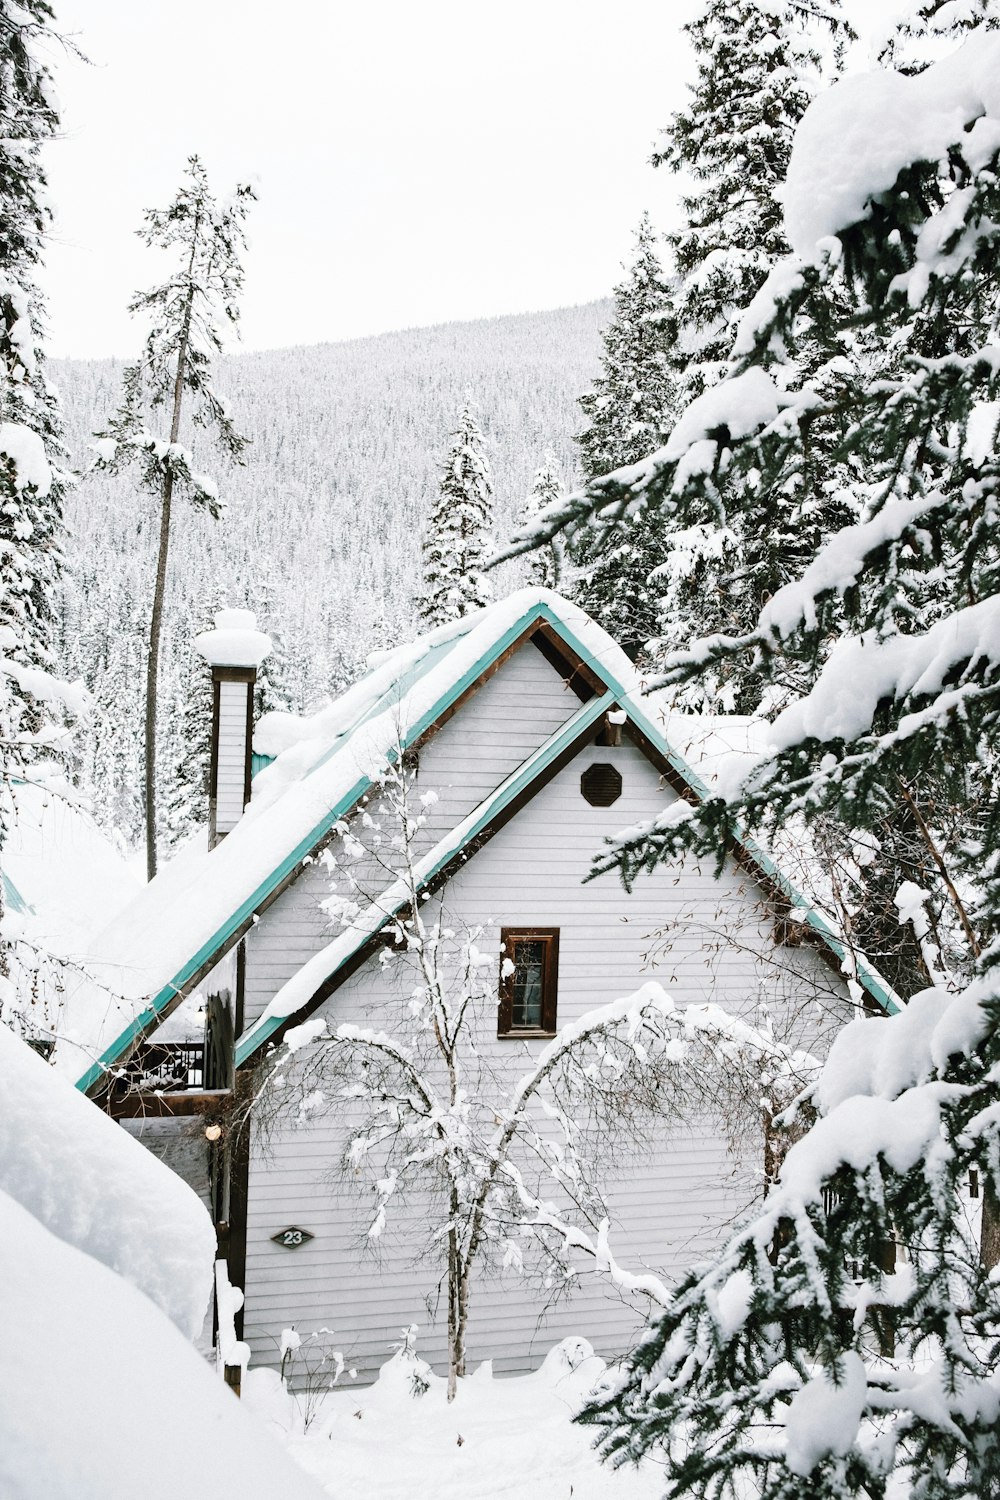 casa di legno bianca vicino agli alberi coperti di neve